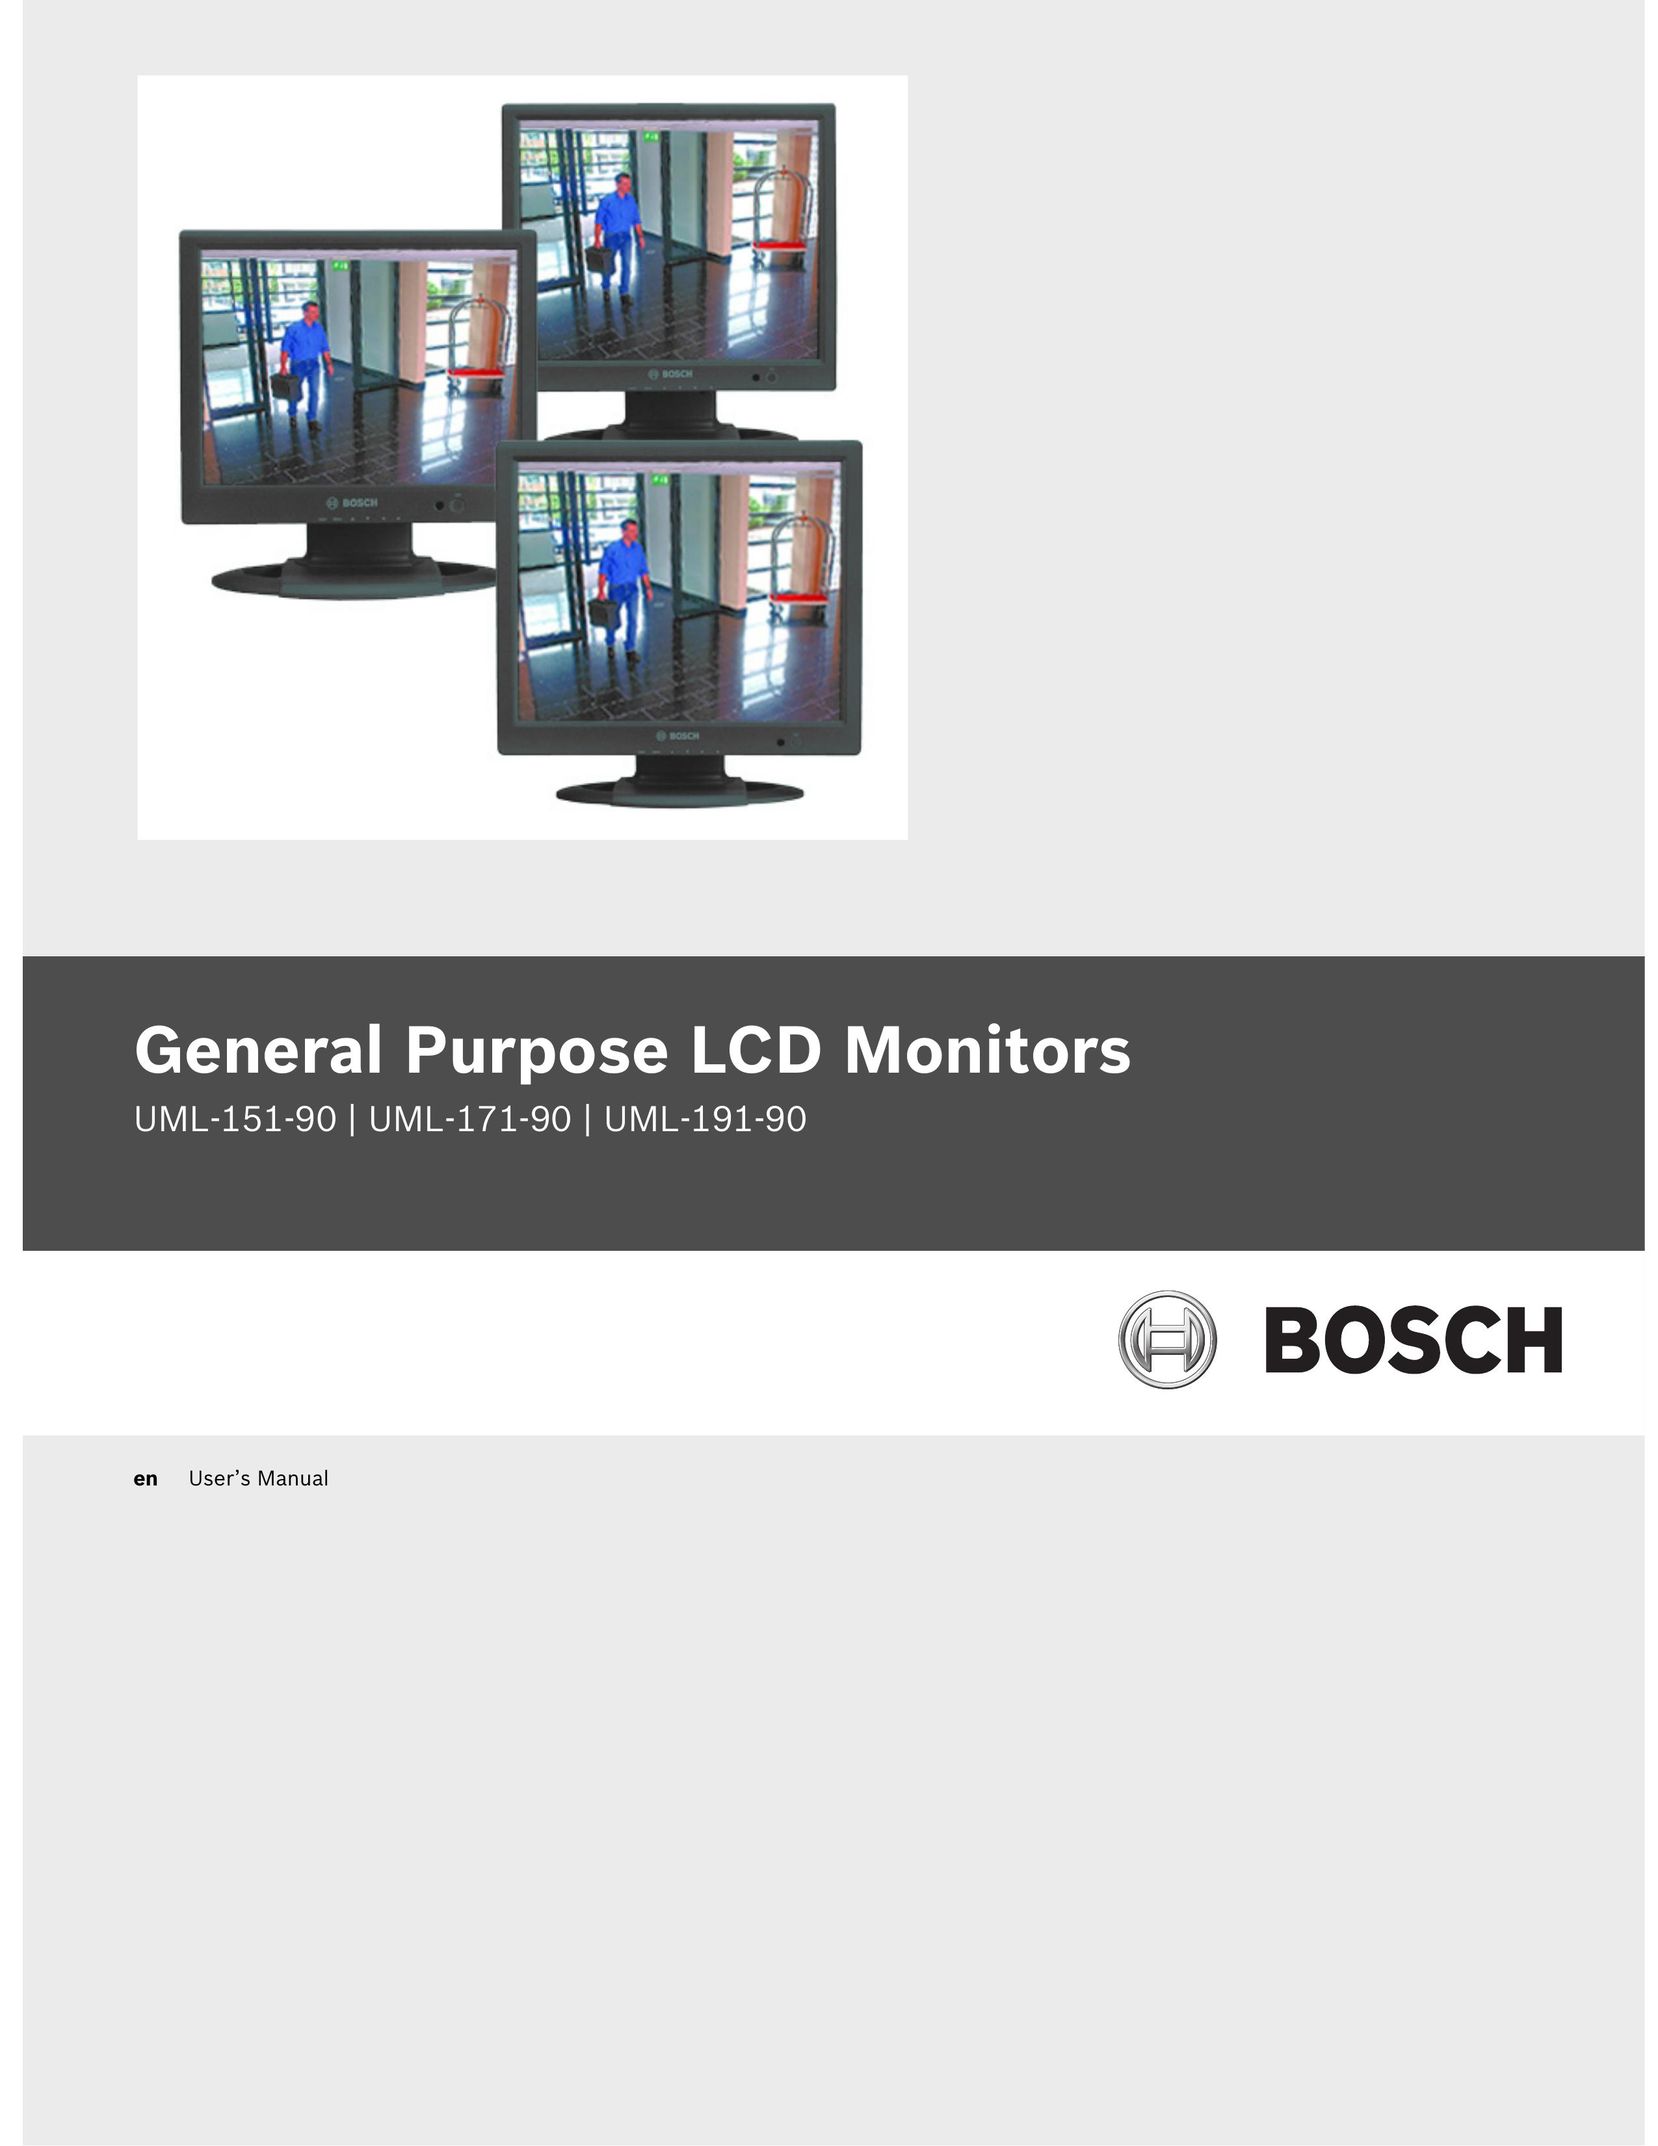 Bosch Appliances UML-151-90 Computer Monitor User Manual